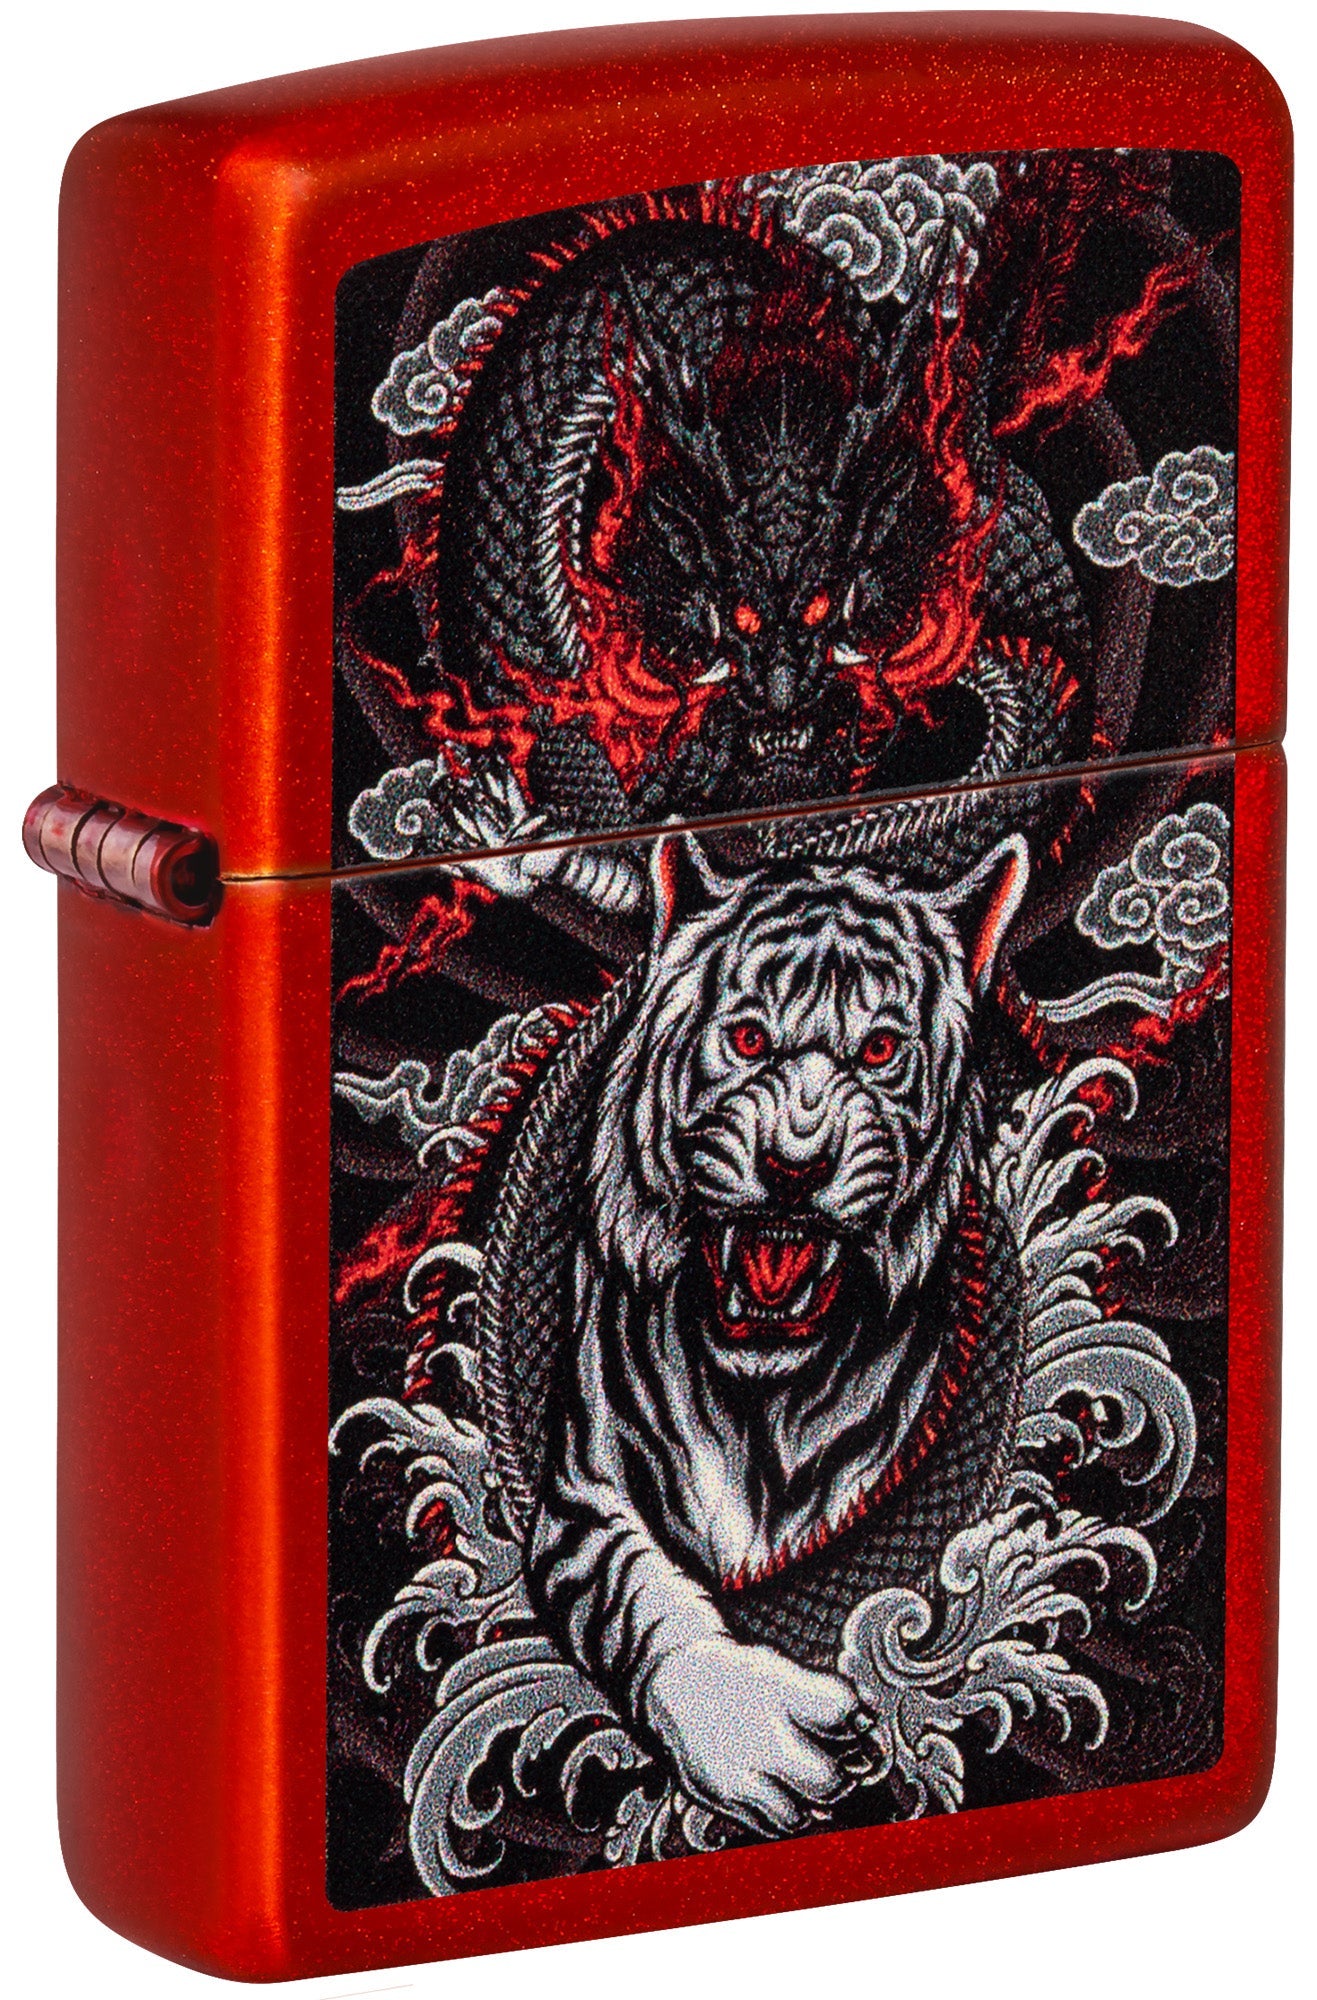 Zippo Lighter: Dragon and Tiger - Metallic Red 48933